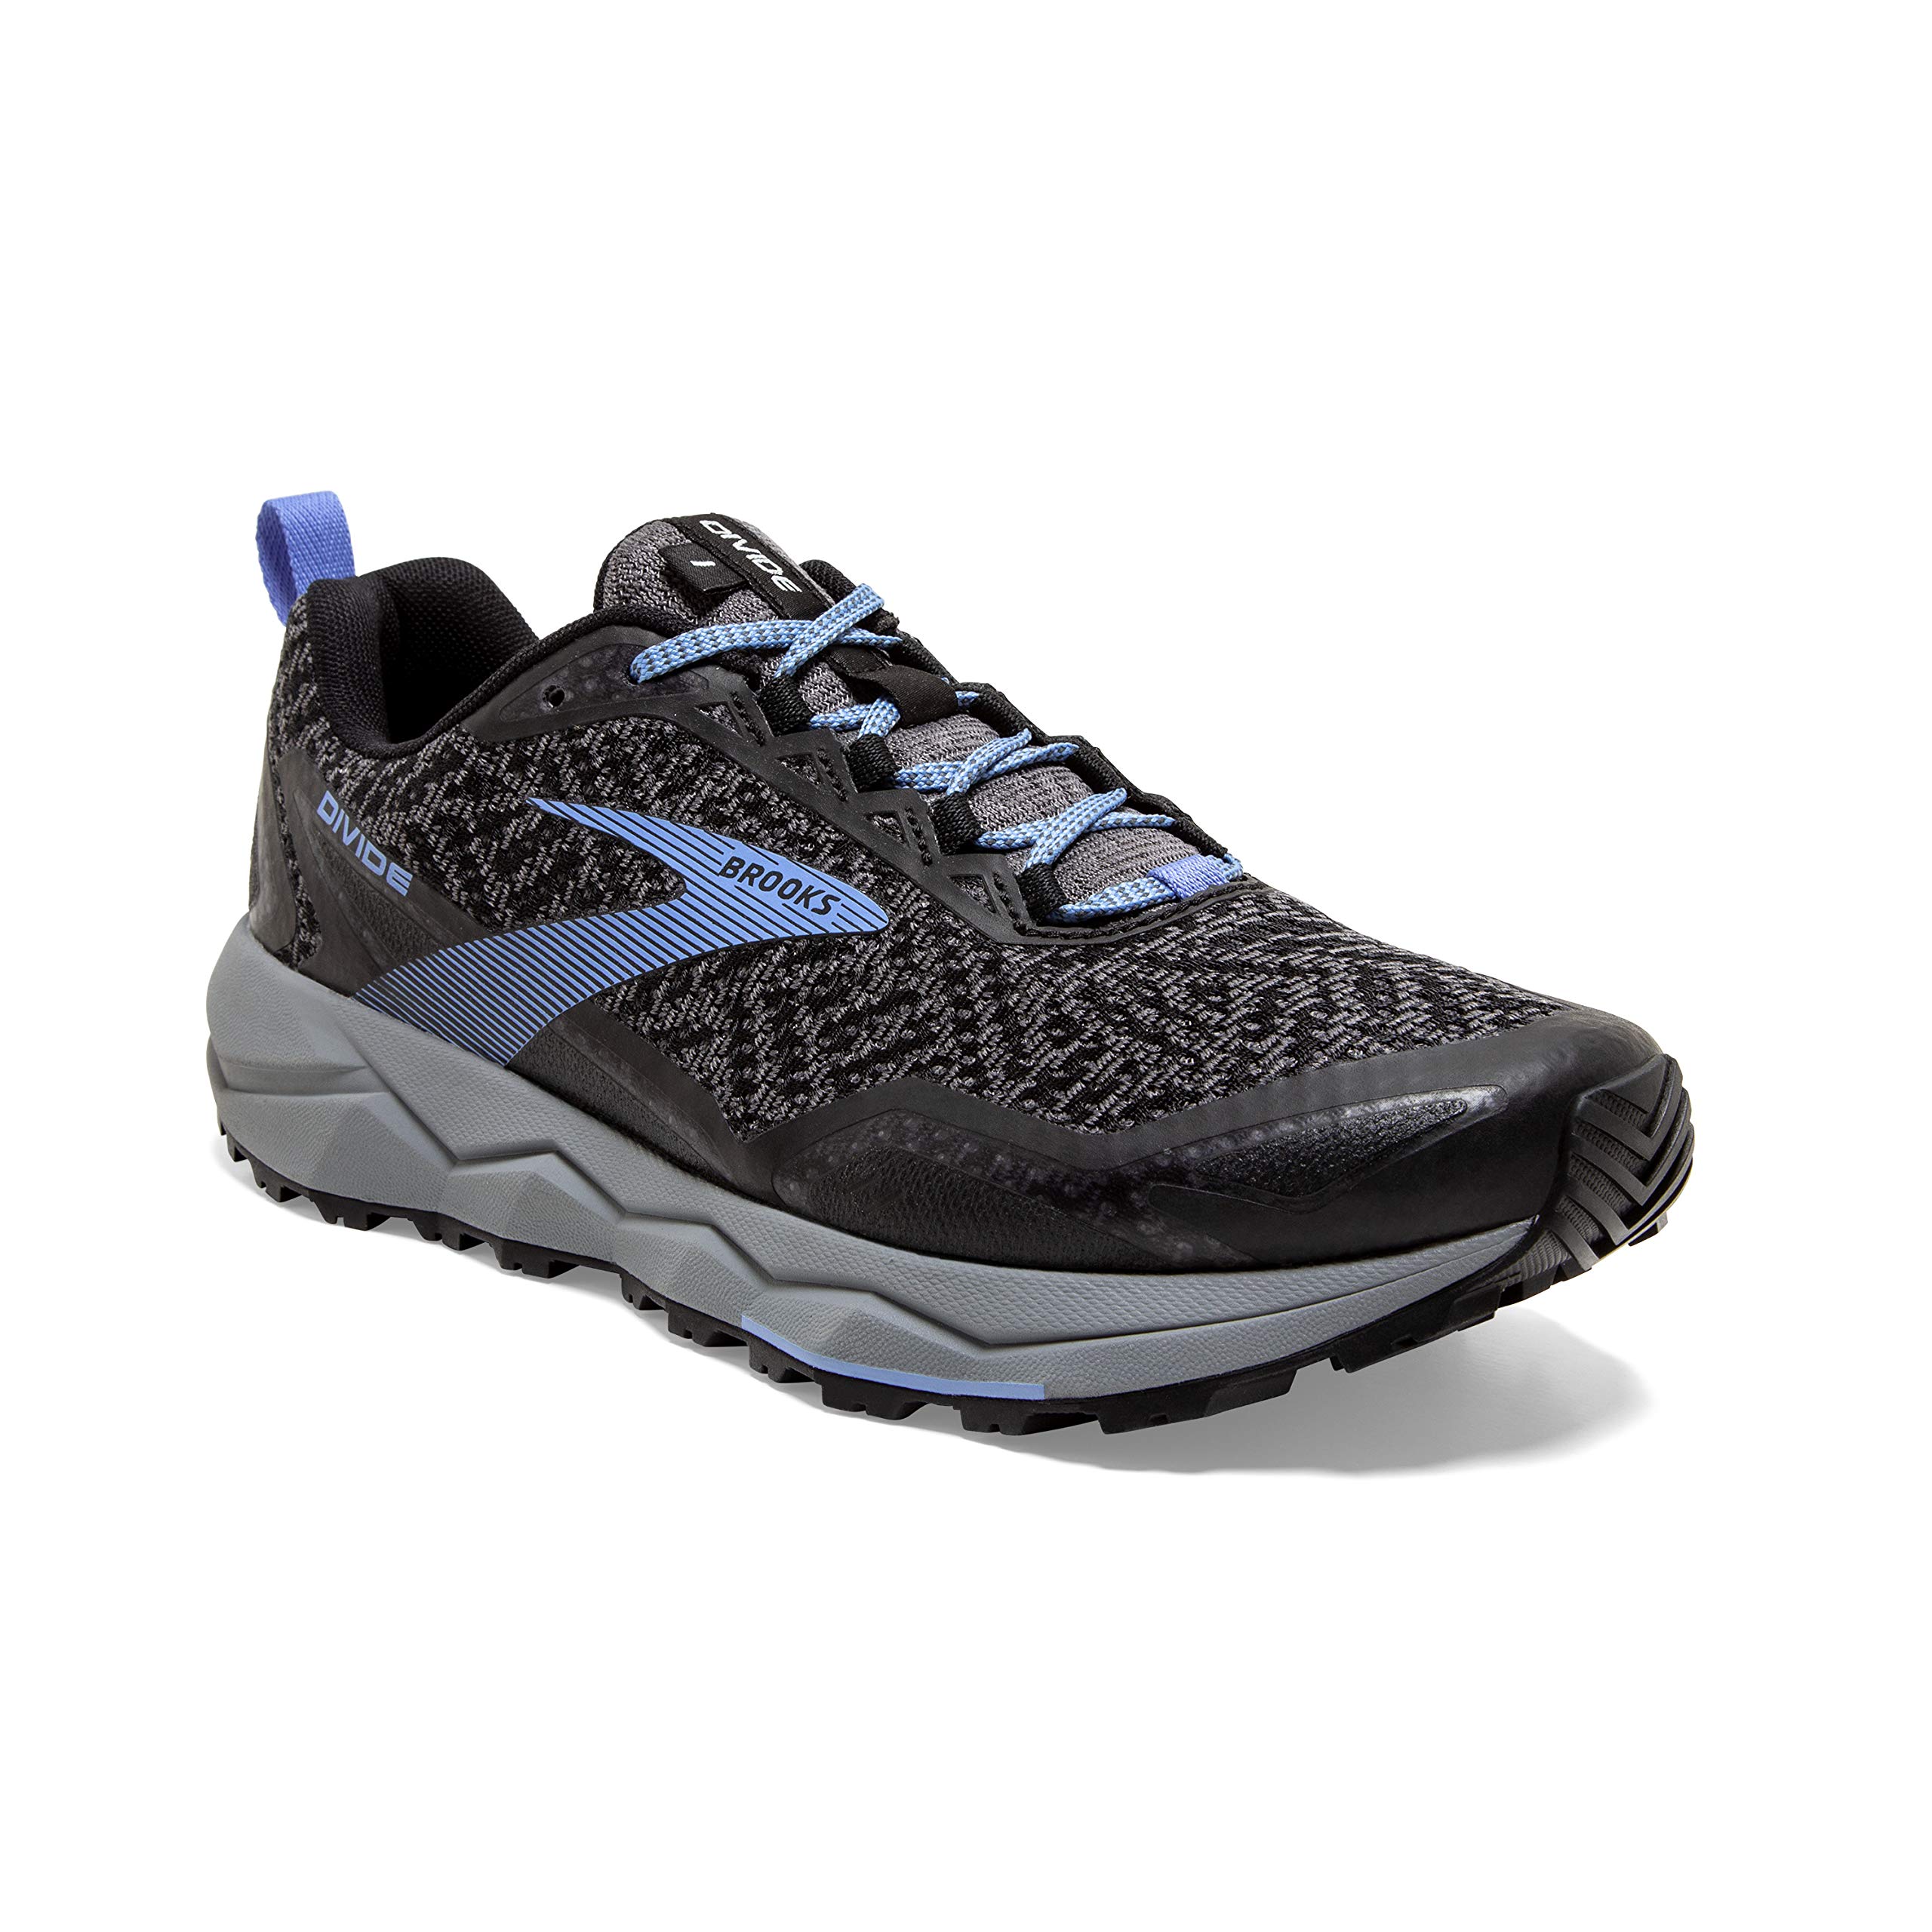 Brooks Womens Divide Running Shoe - Grey/Black/Cornflower Blue - B - 6.5